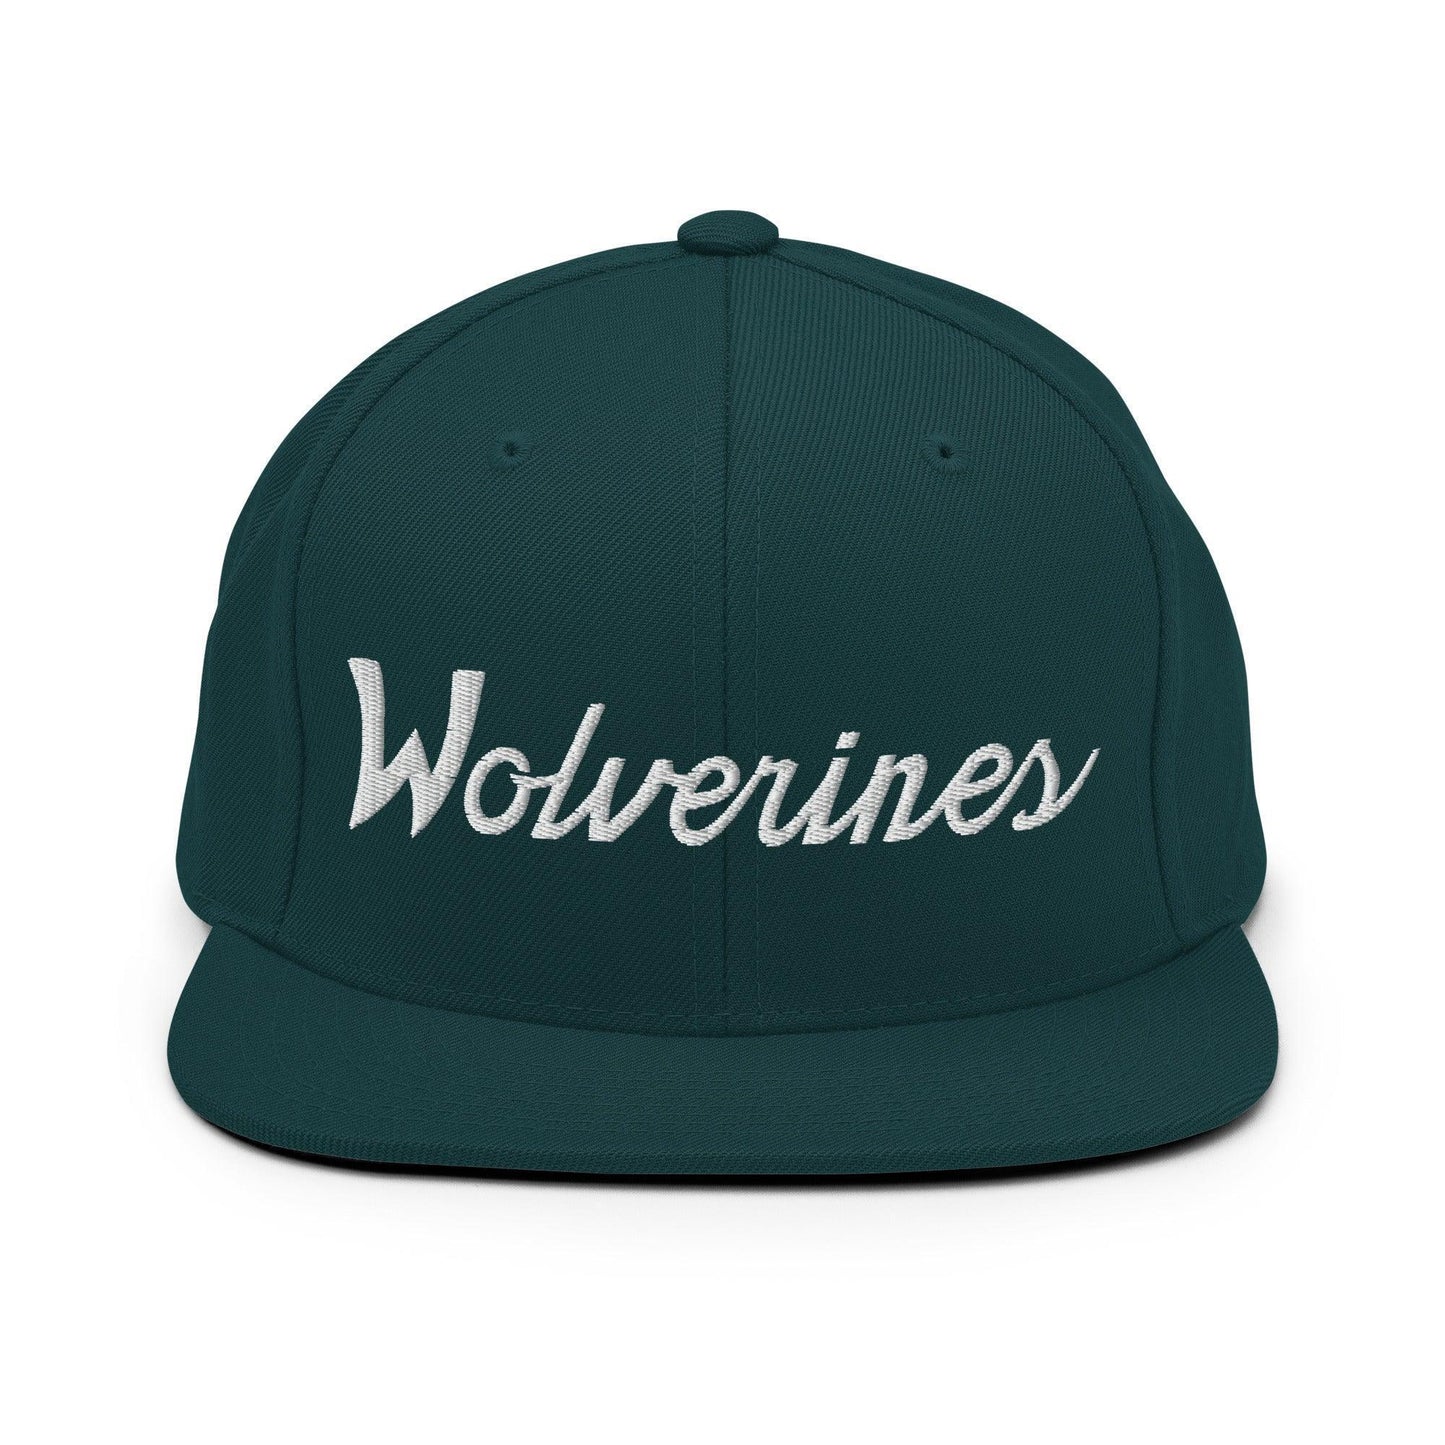 Wolverines School Mascot Script Snapback Hat Spruce